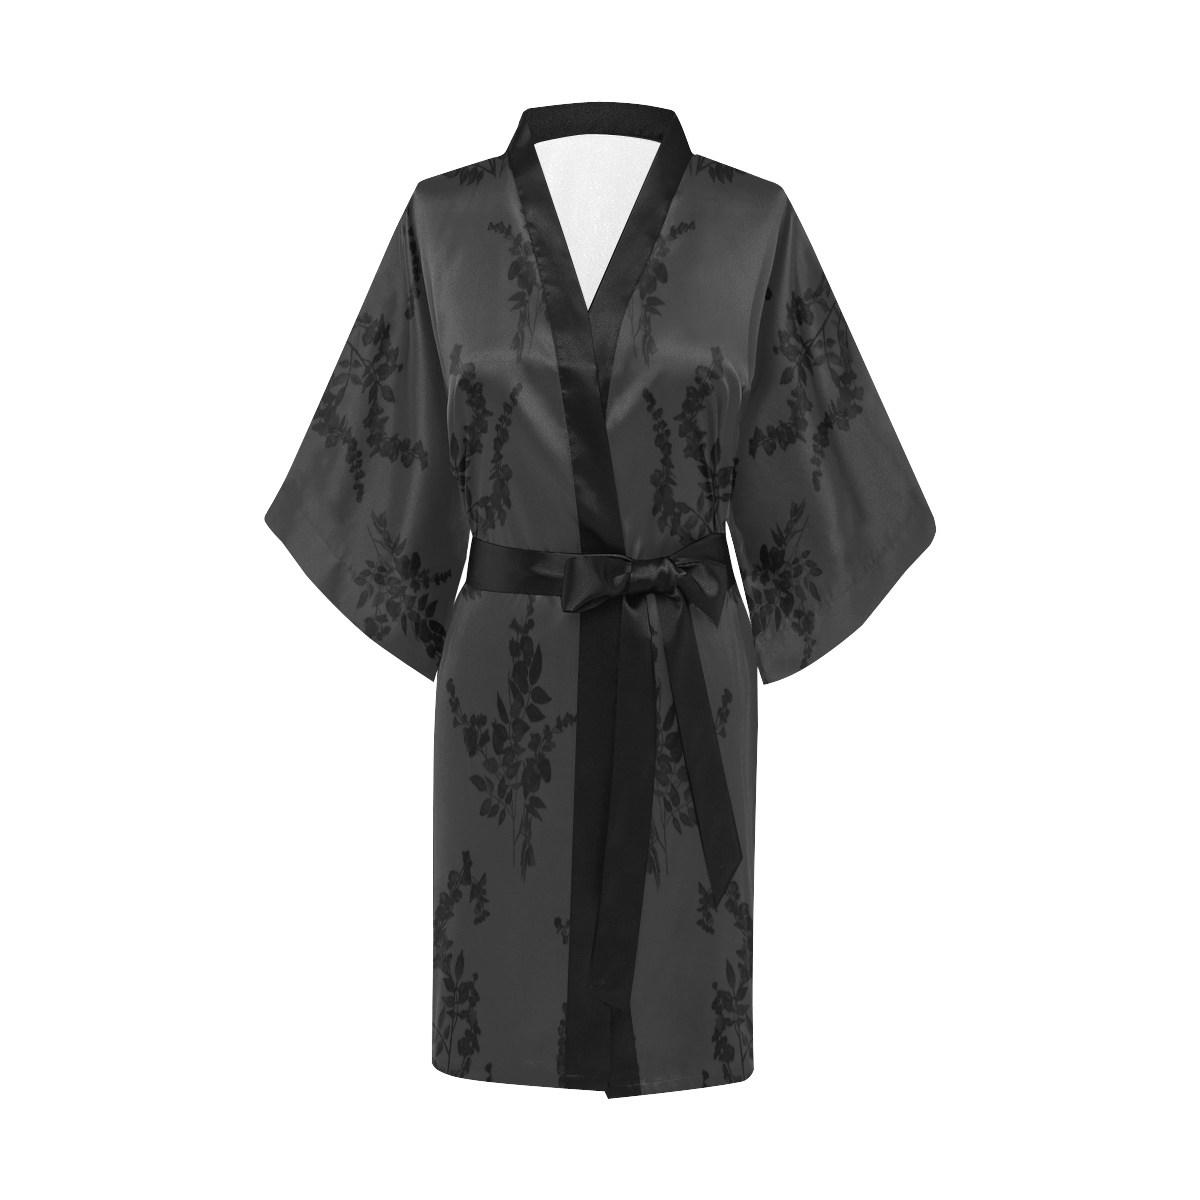 Tiny black flowers on gray Kimono Robe